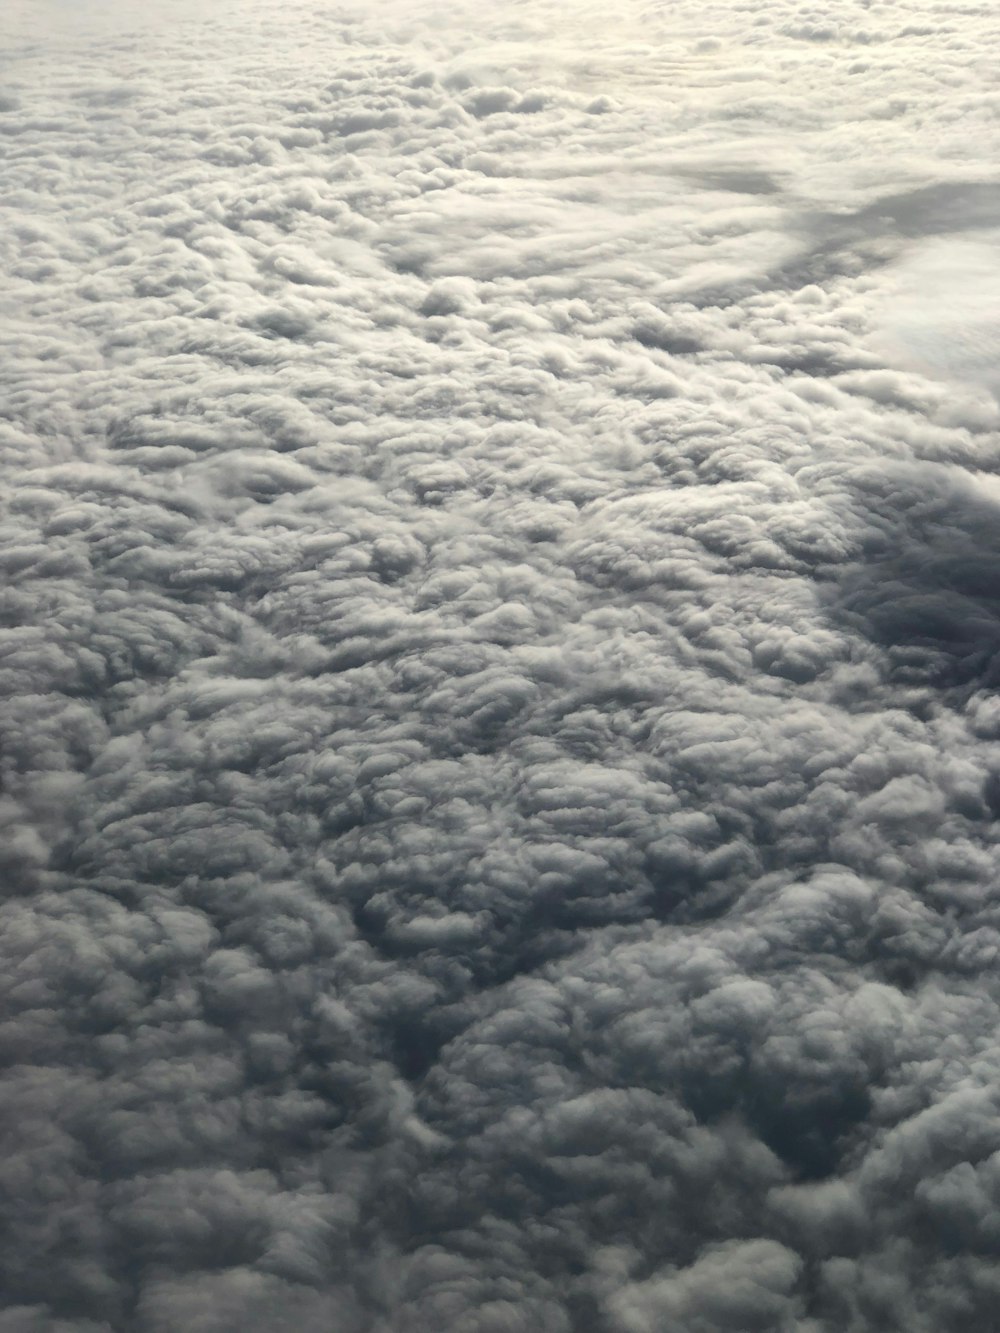 Luftbild einer Nimbuswolke